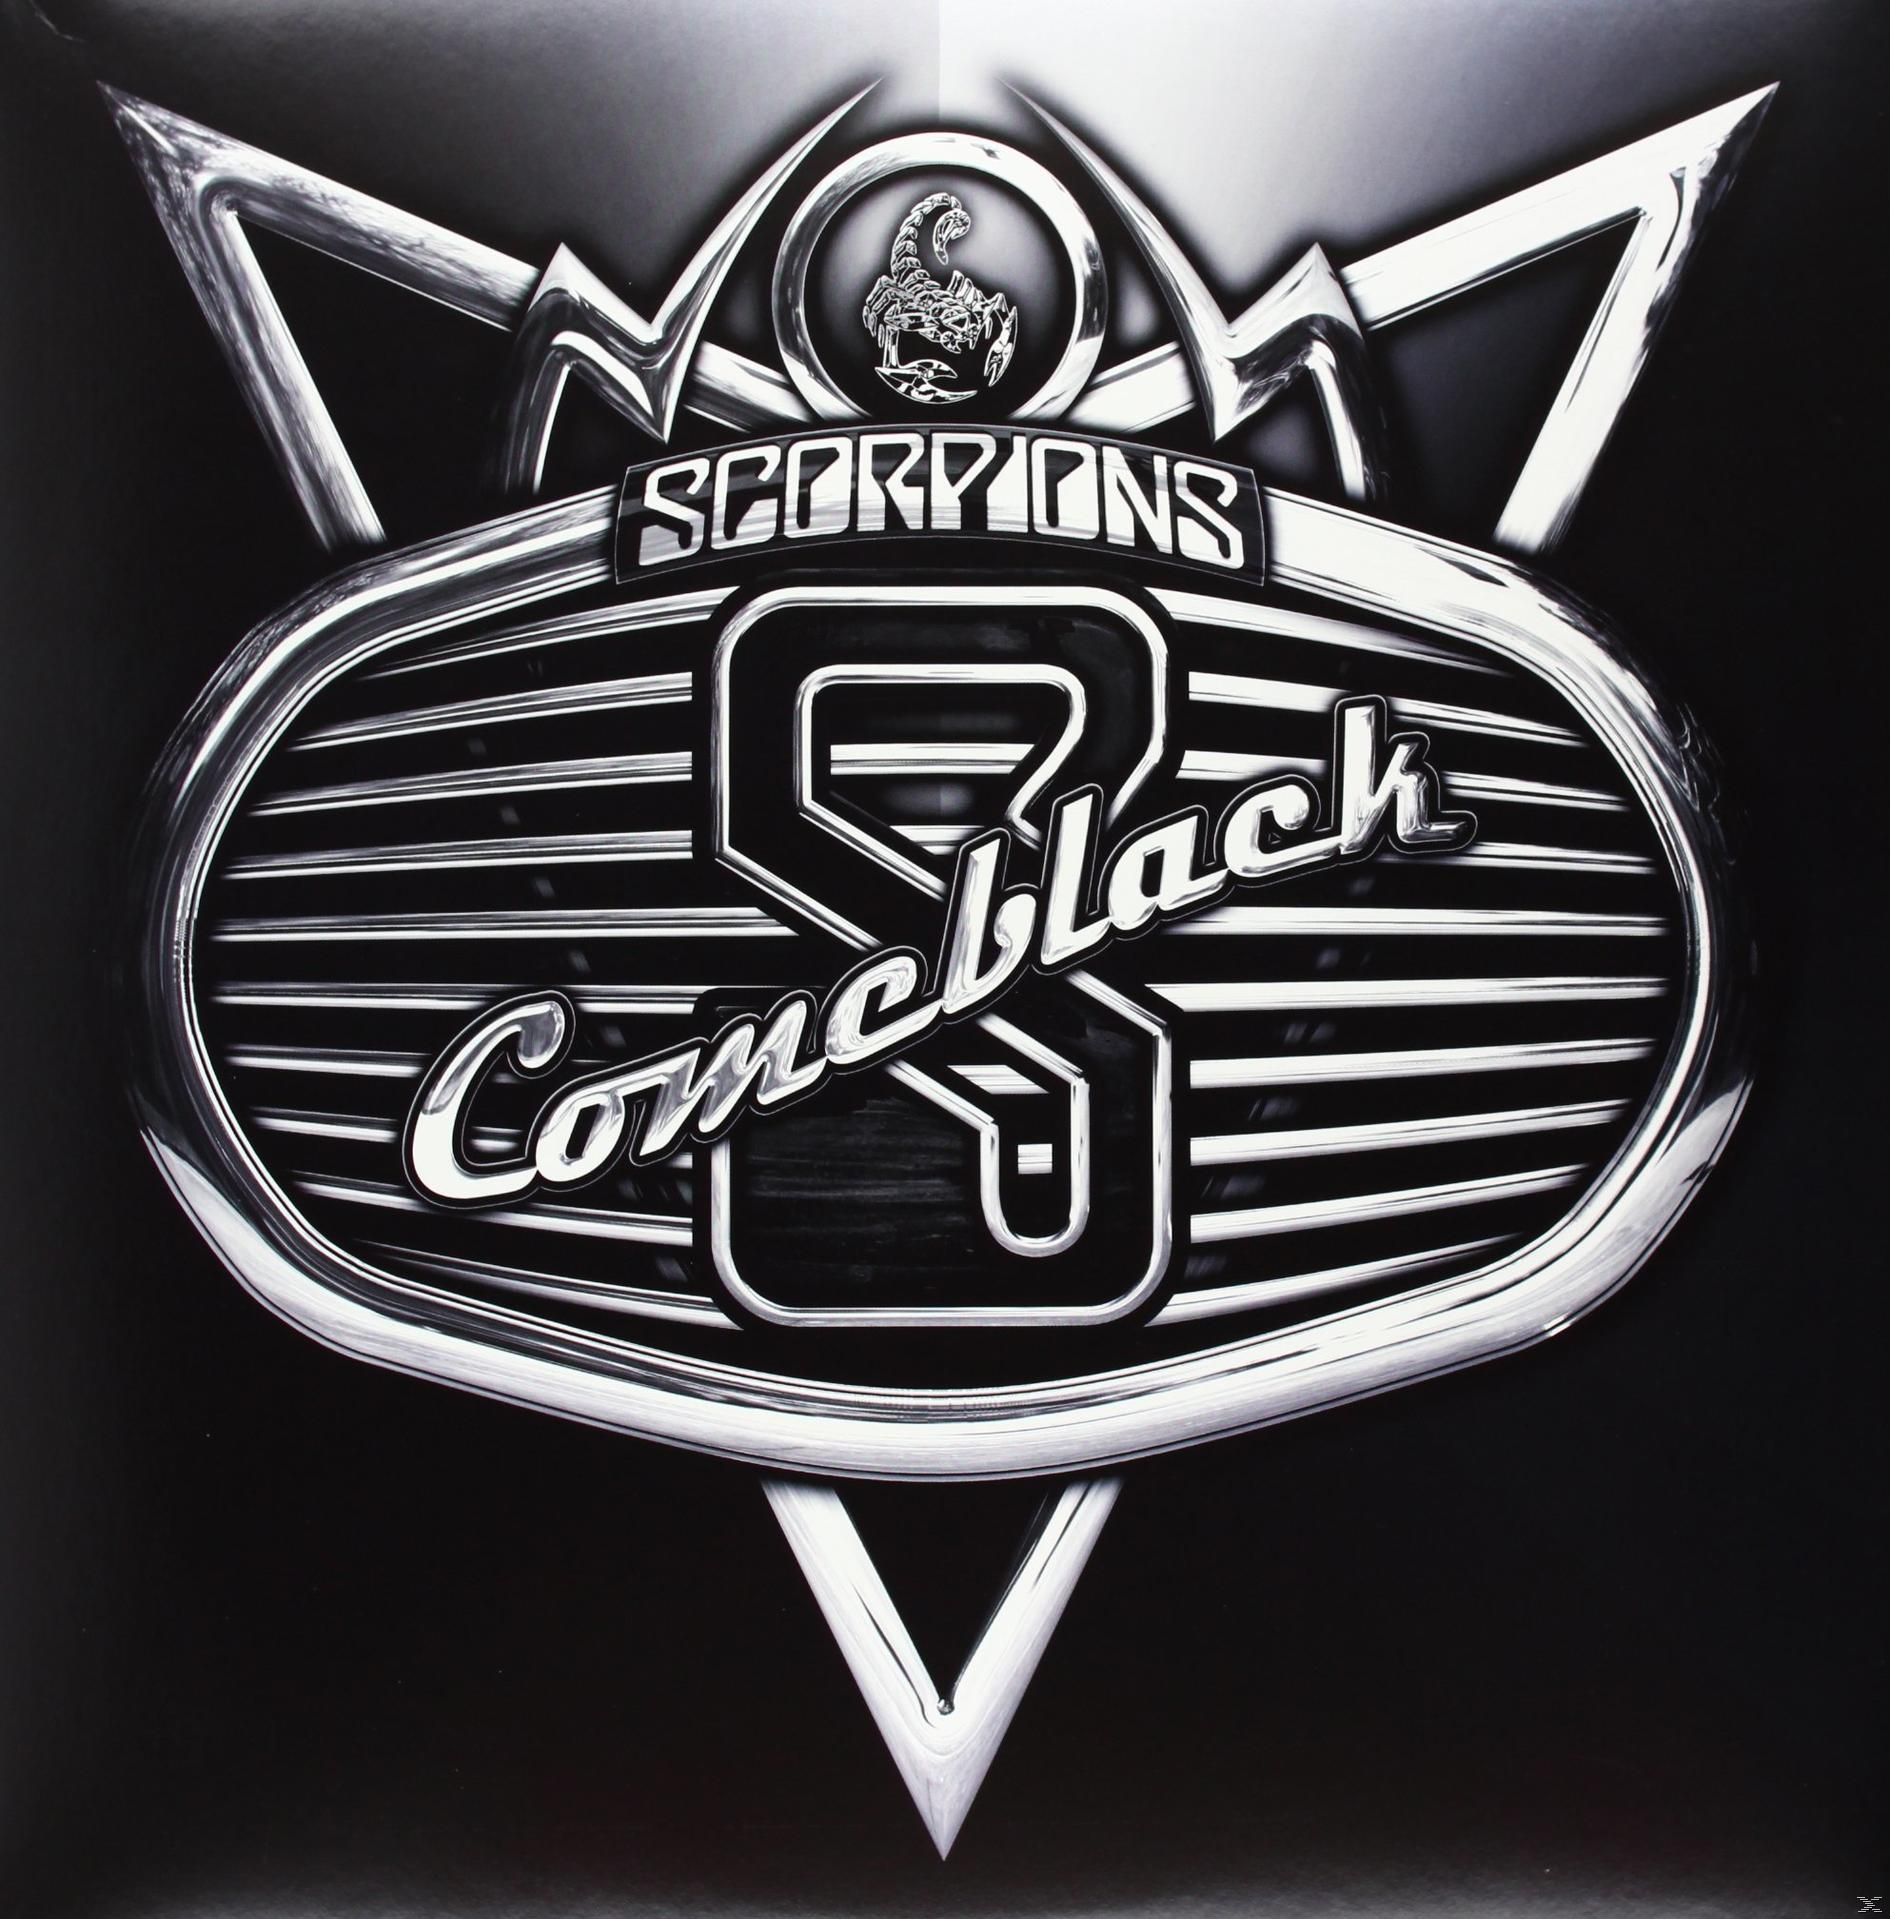 Scorpions - Comeblack - (Vinyl)